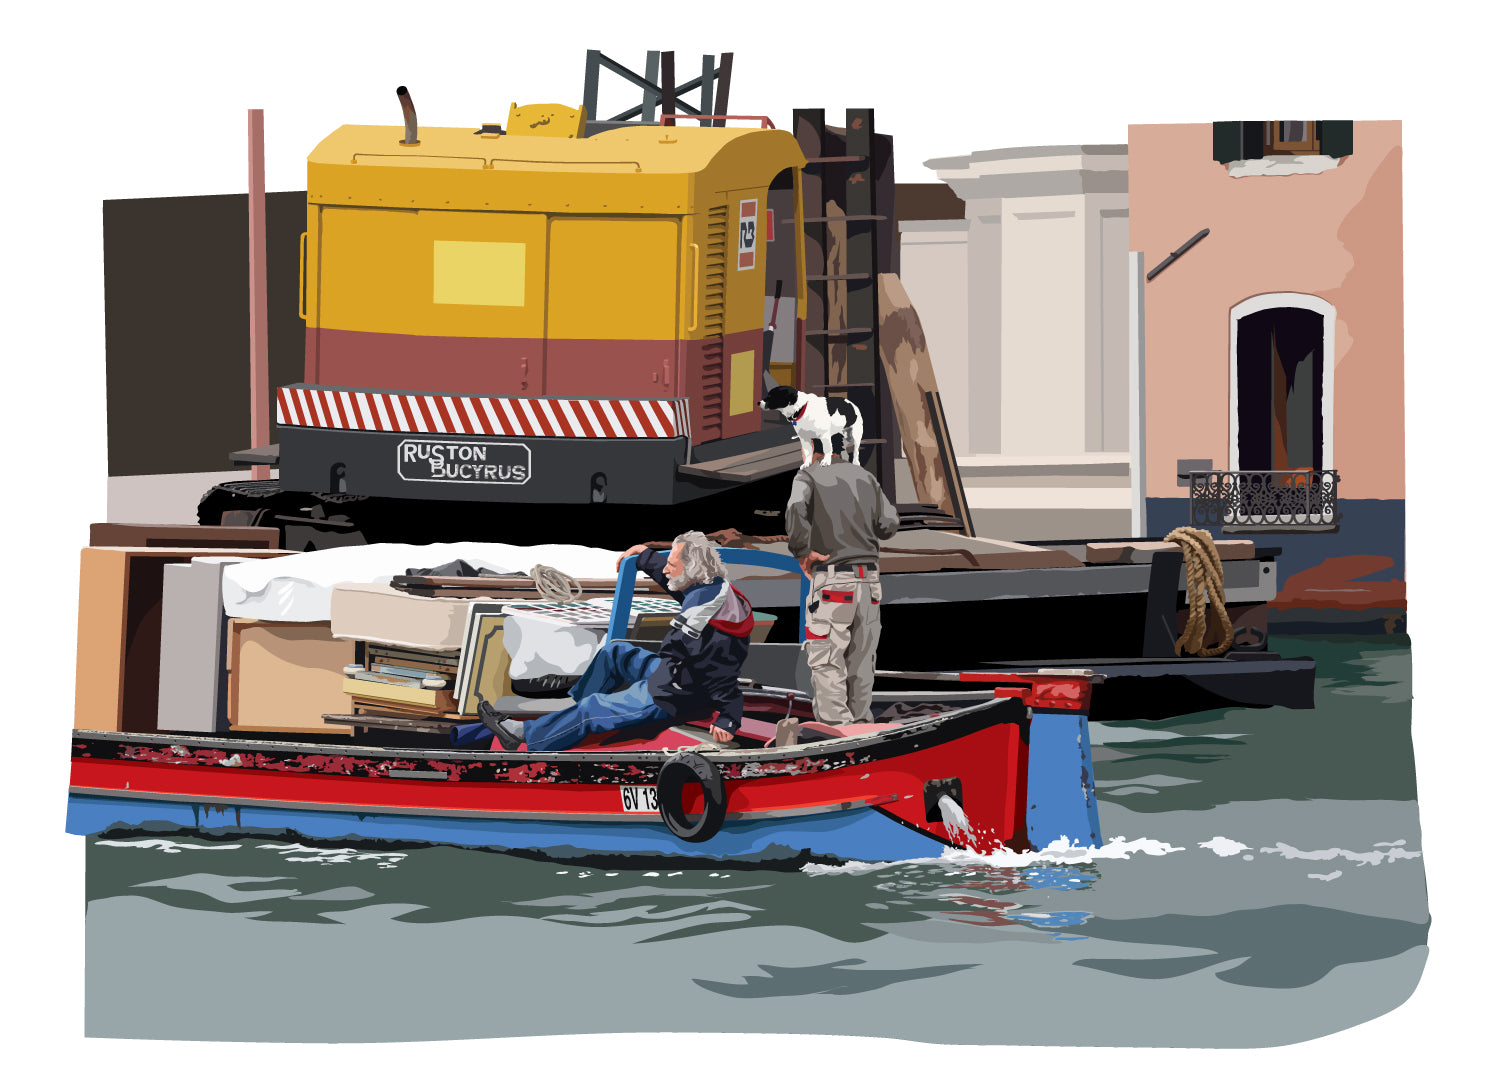 Sea dog, Venice barge